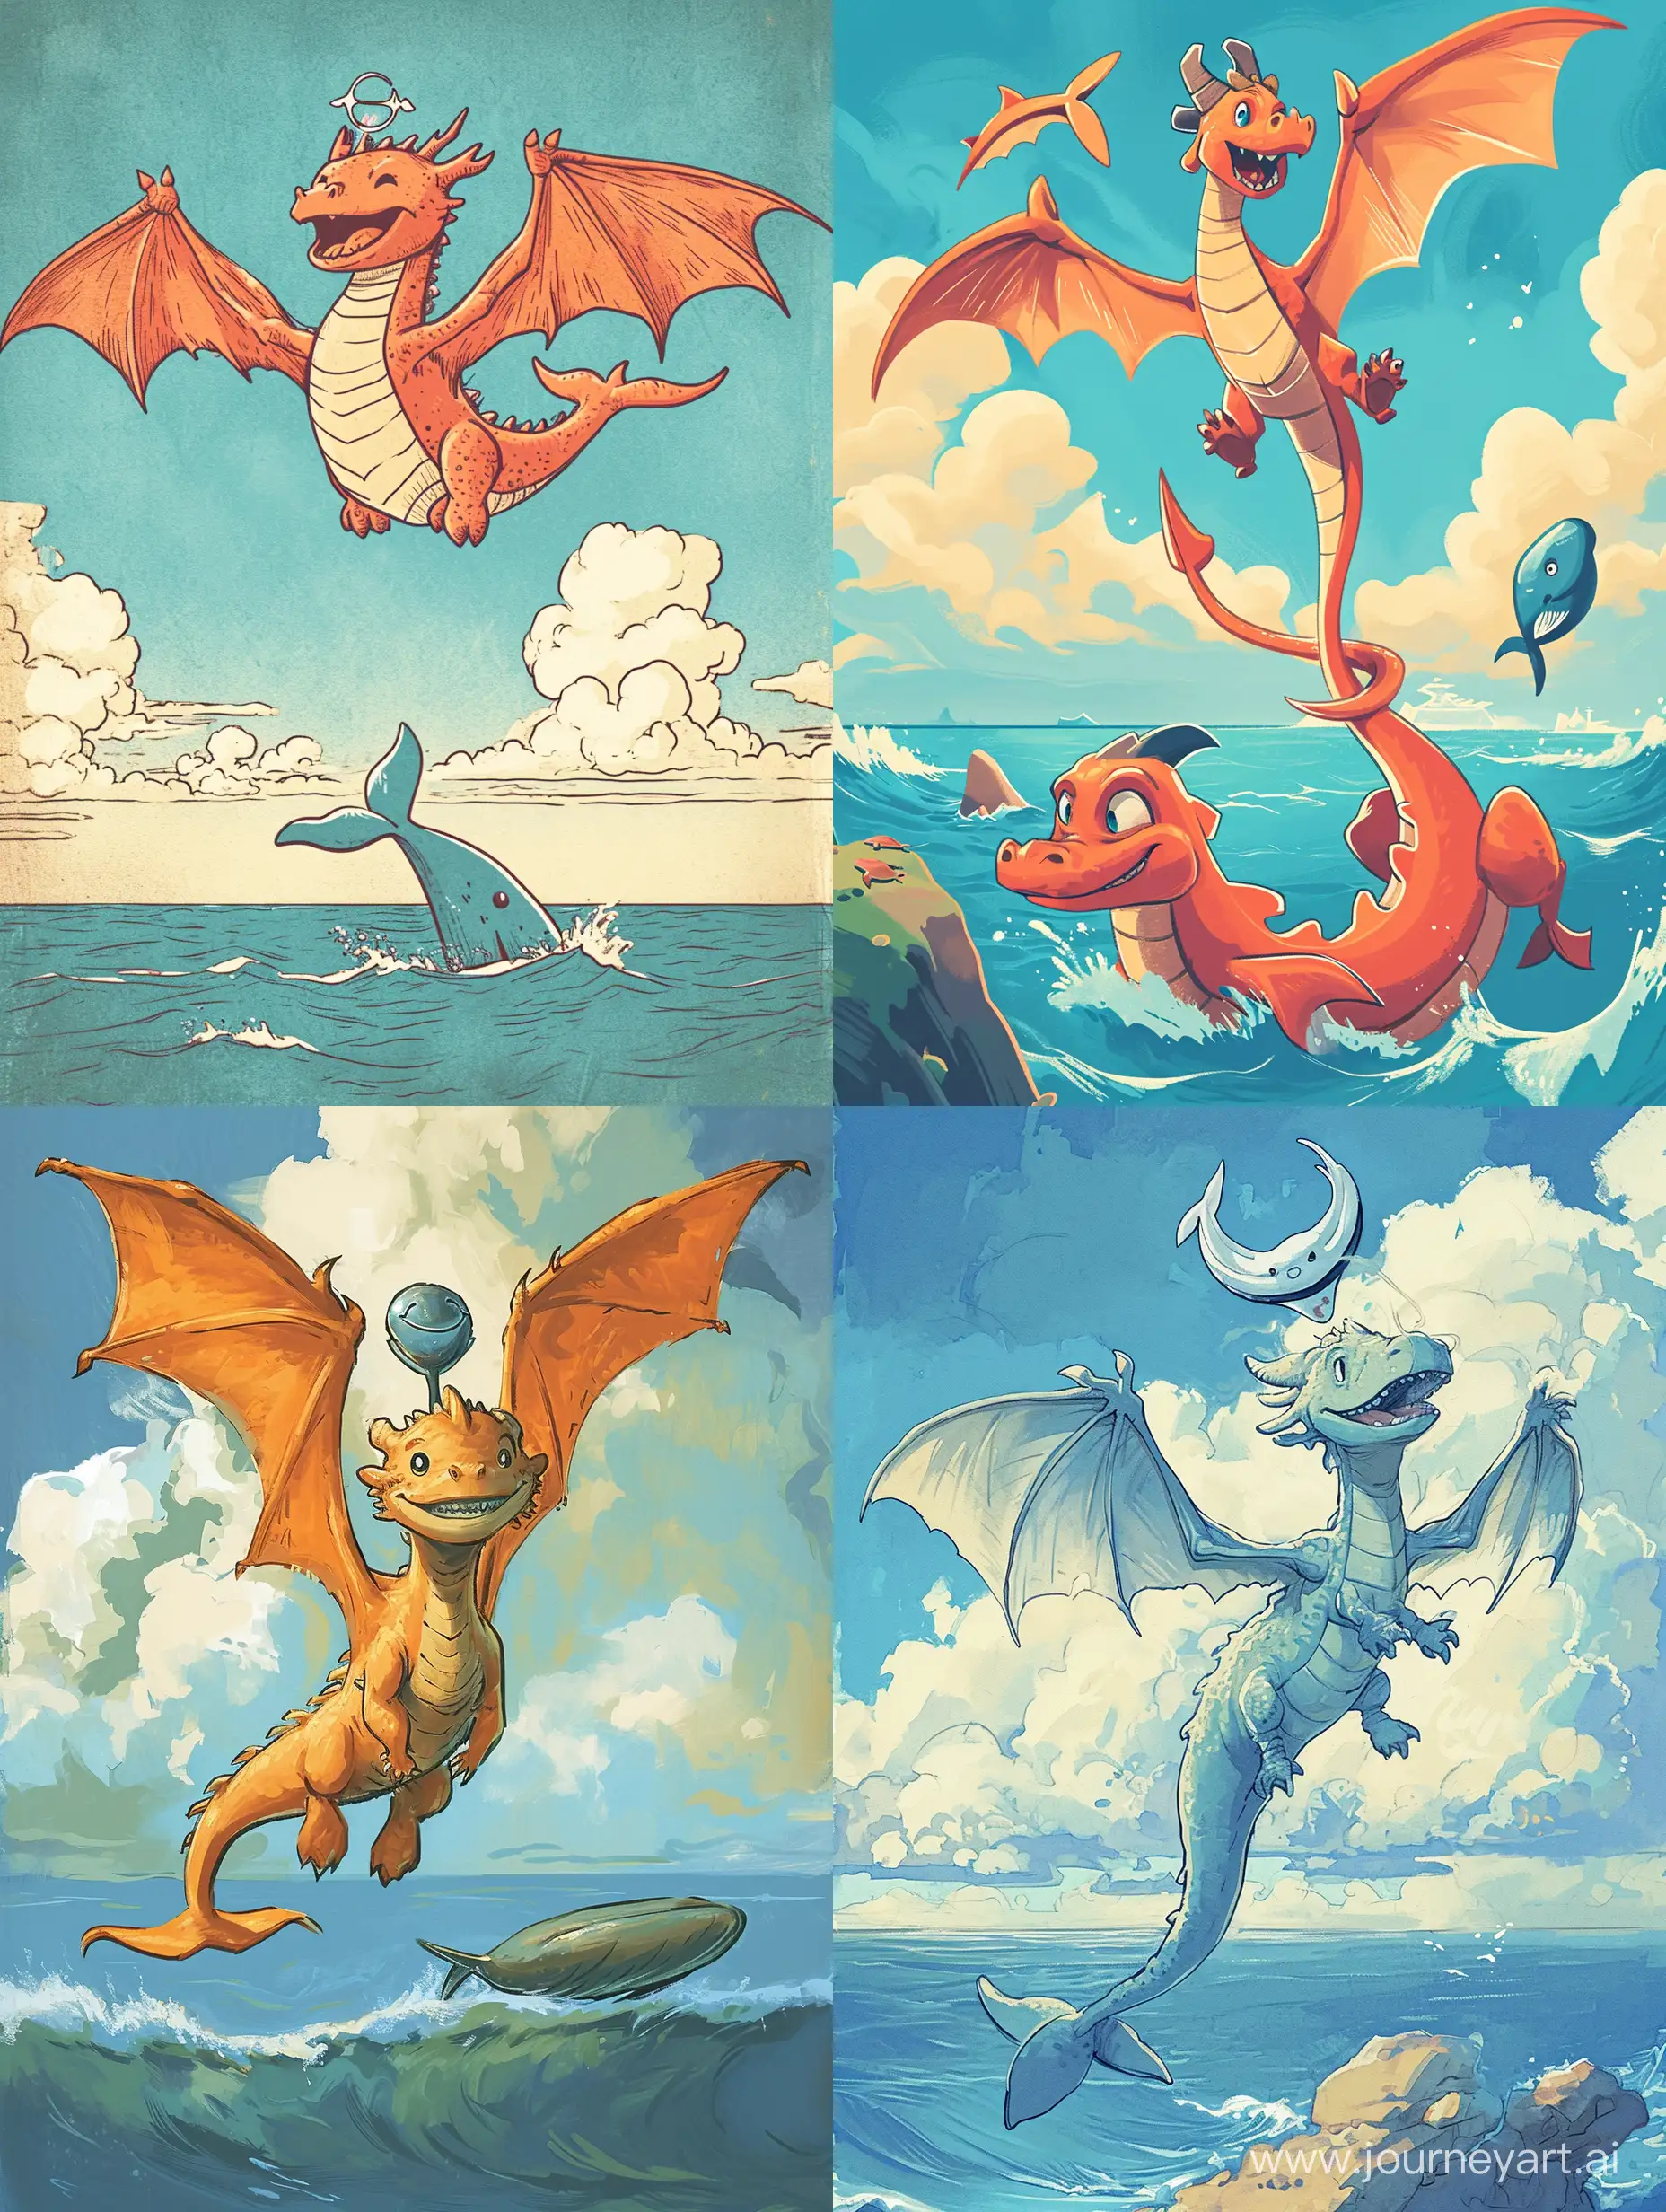 Joyful-James-Jean-Style-Dragon-Soaring-Above-Ocean-with-Whale-Emblem